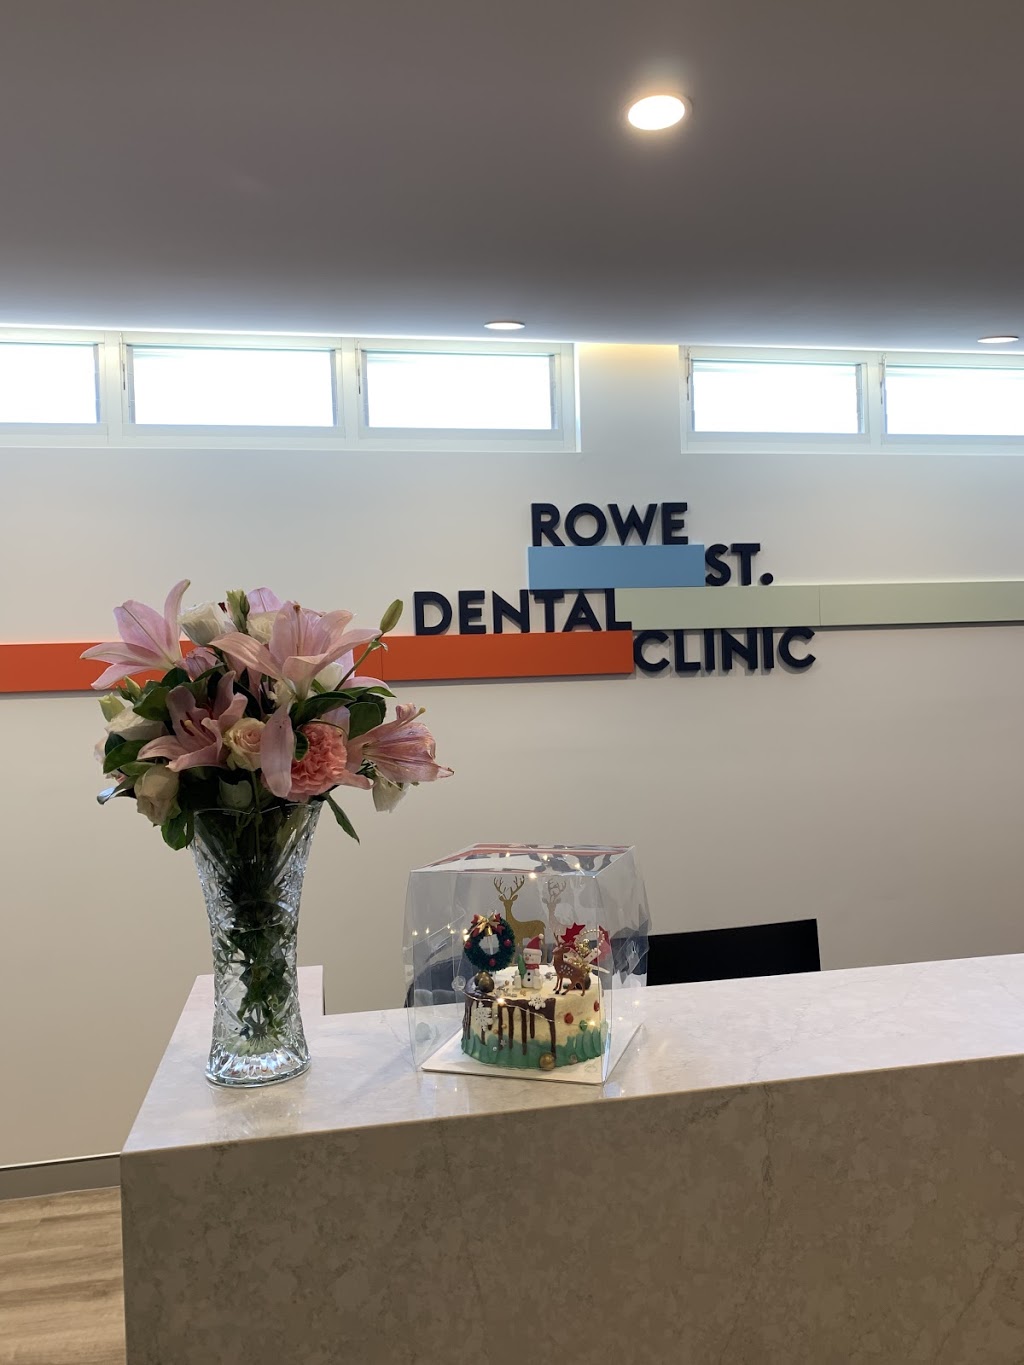 Rowe st. Dental Clinic | Suite 1/204 Rowe St, Eastwood NSW 2122, Australia | Phone: (02) 9874 6870